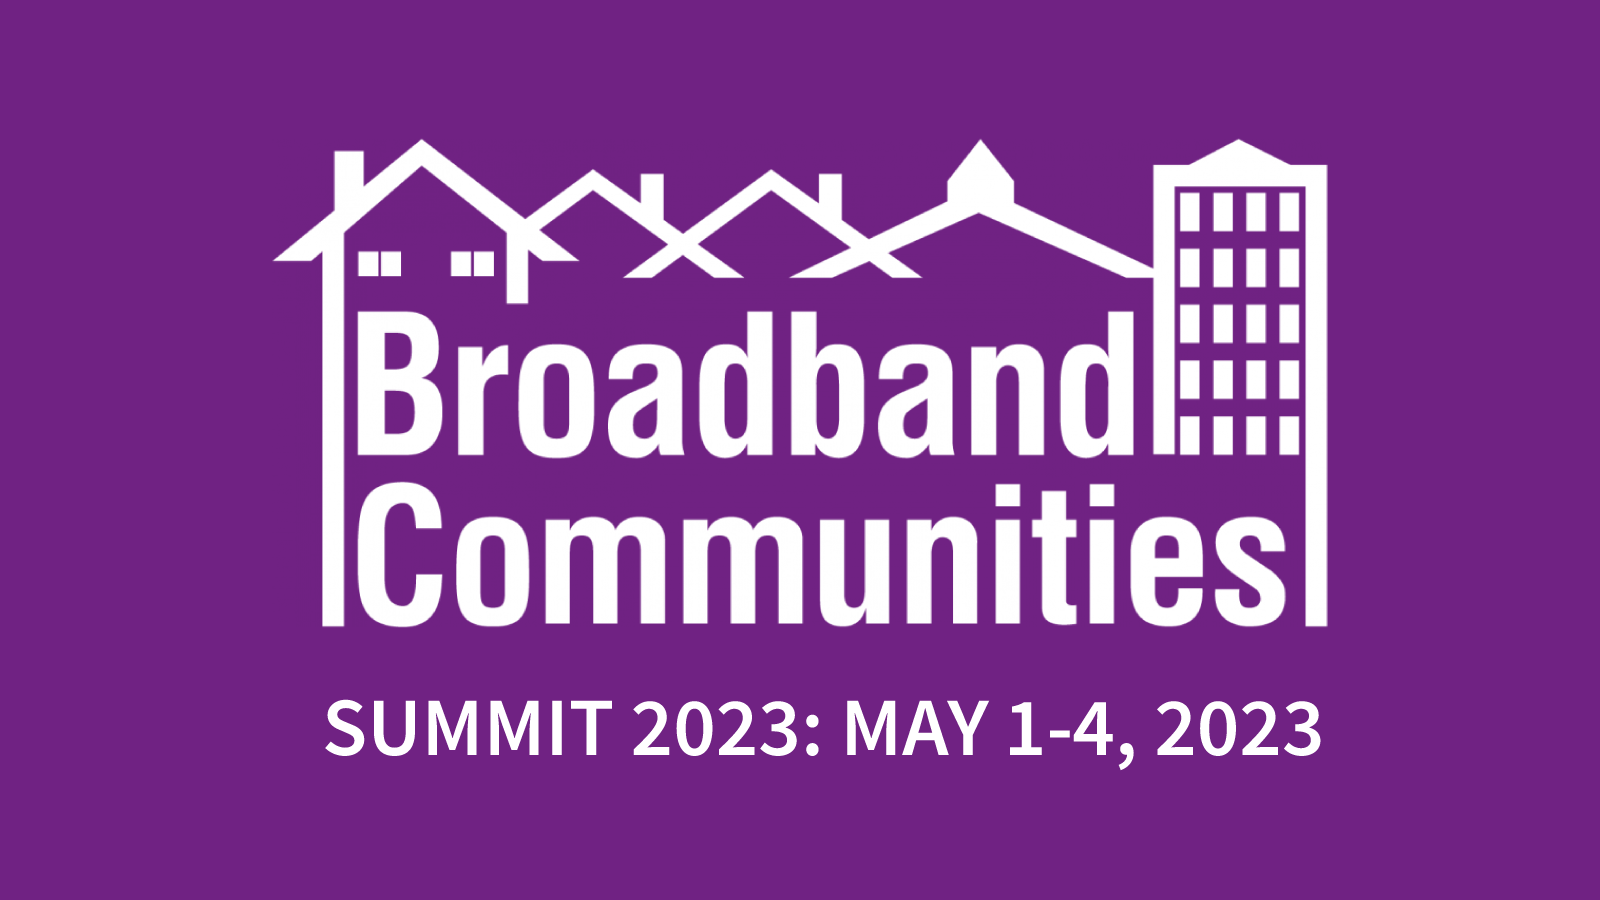 Broadband-Communities-Summit-2023-1600x900